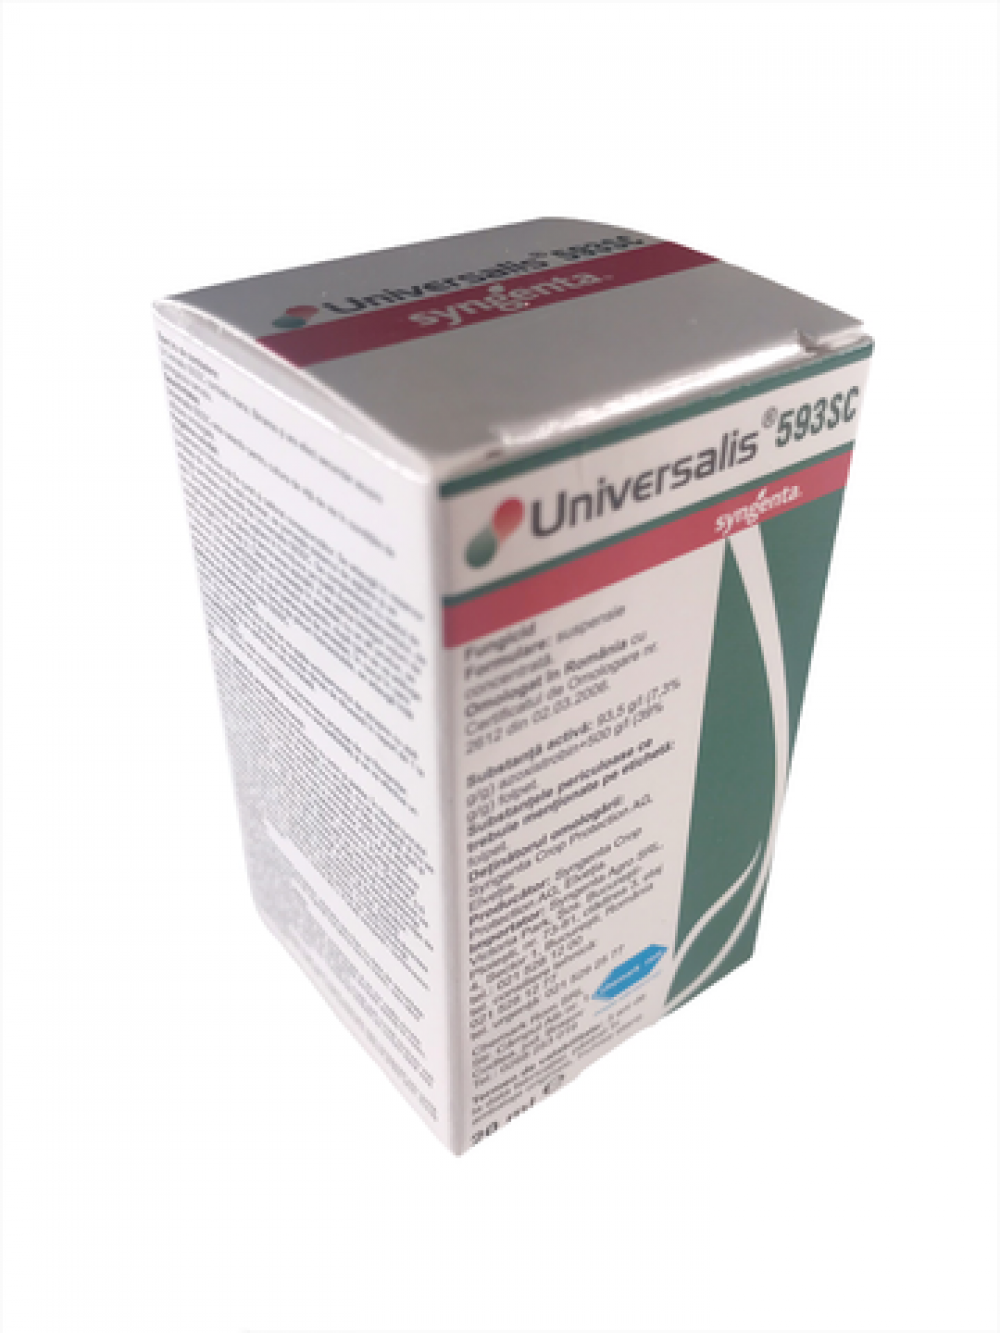 Fungicid Universalis 593 SC 20 ml